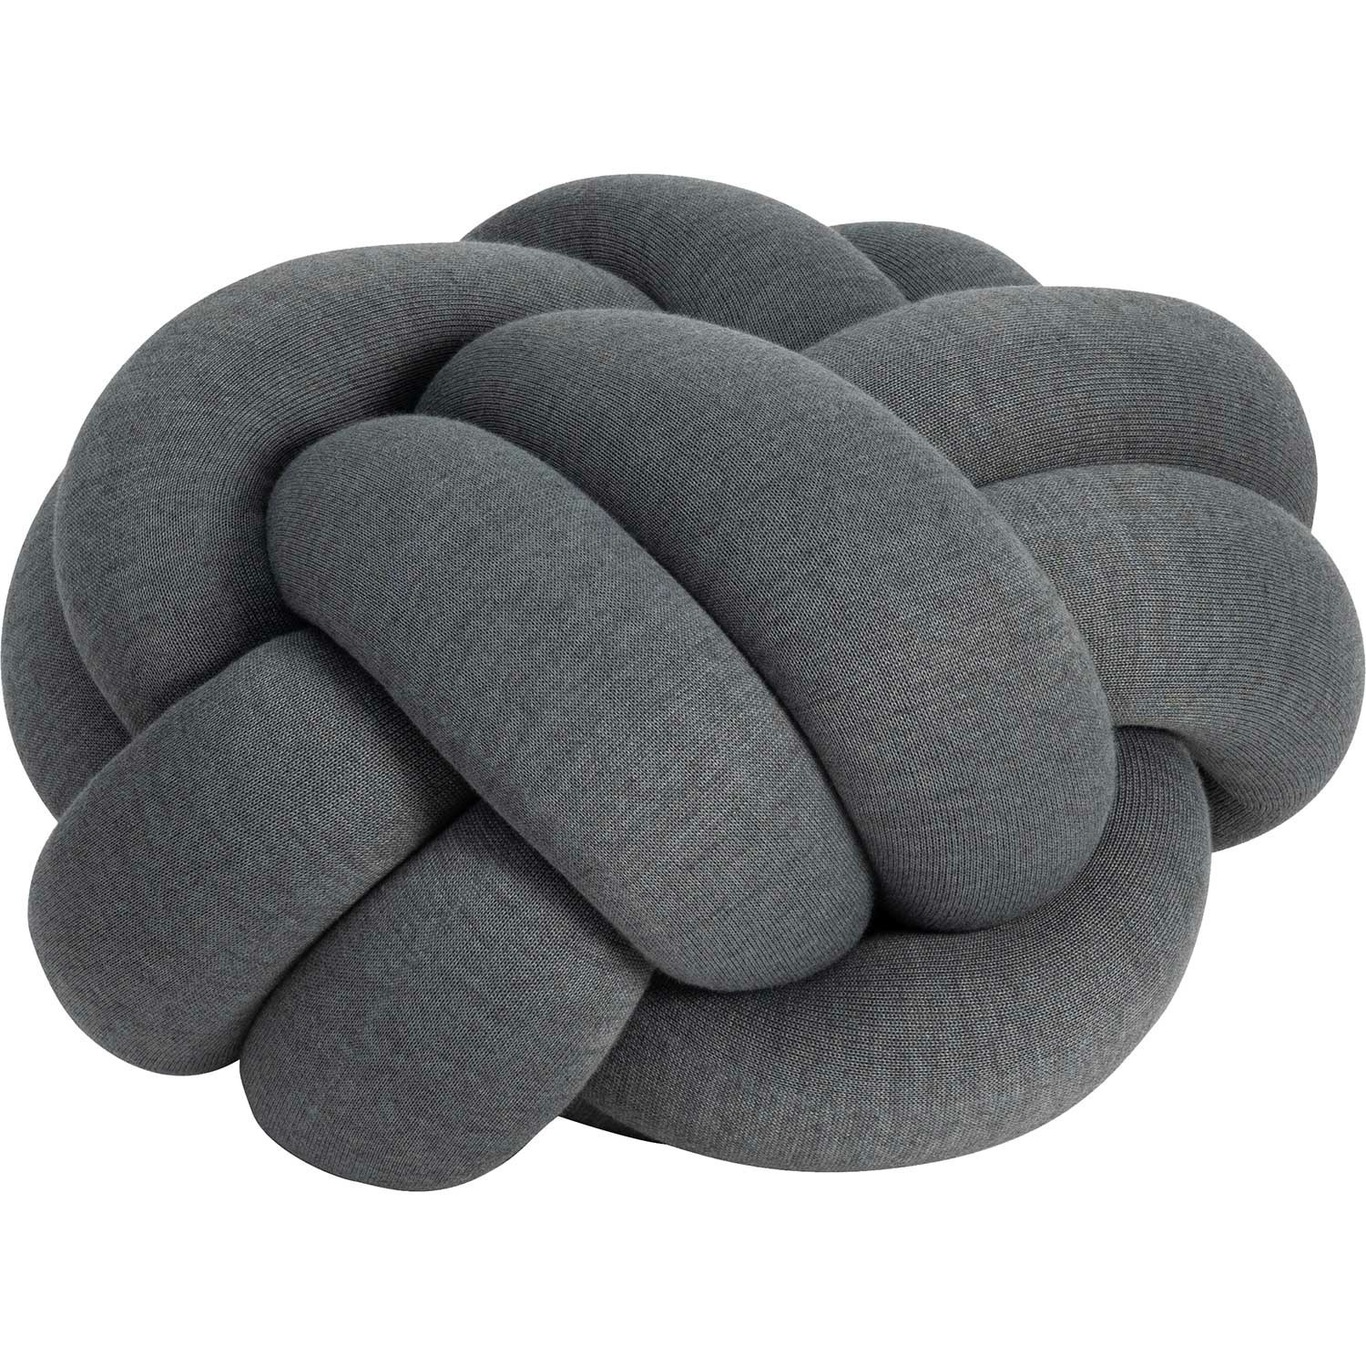 Knot Cushion Medium, Grey